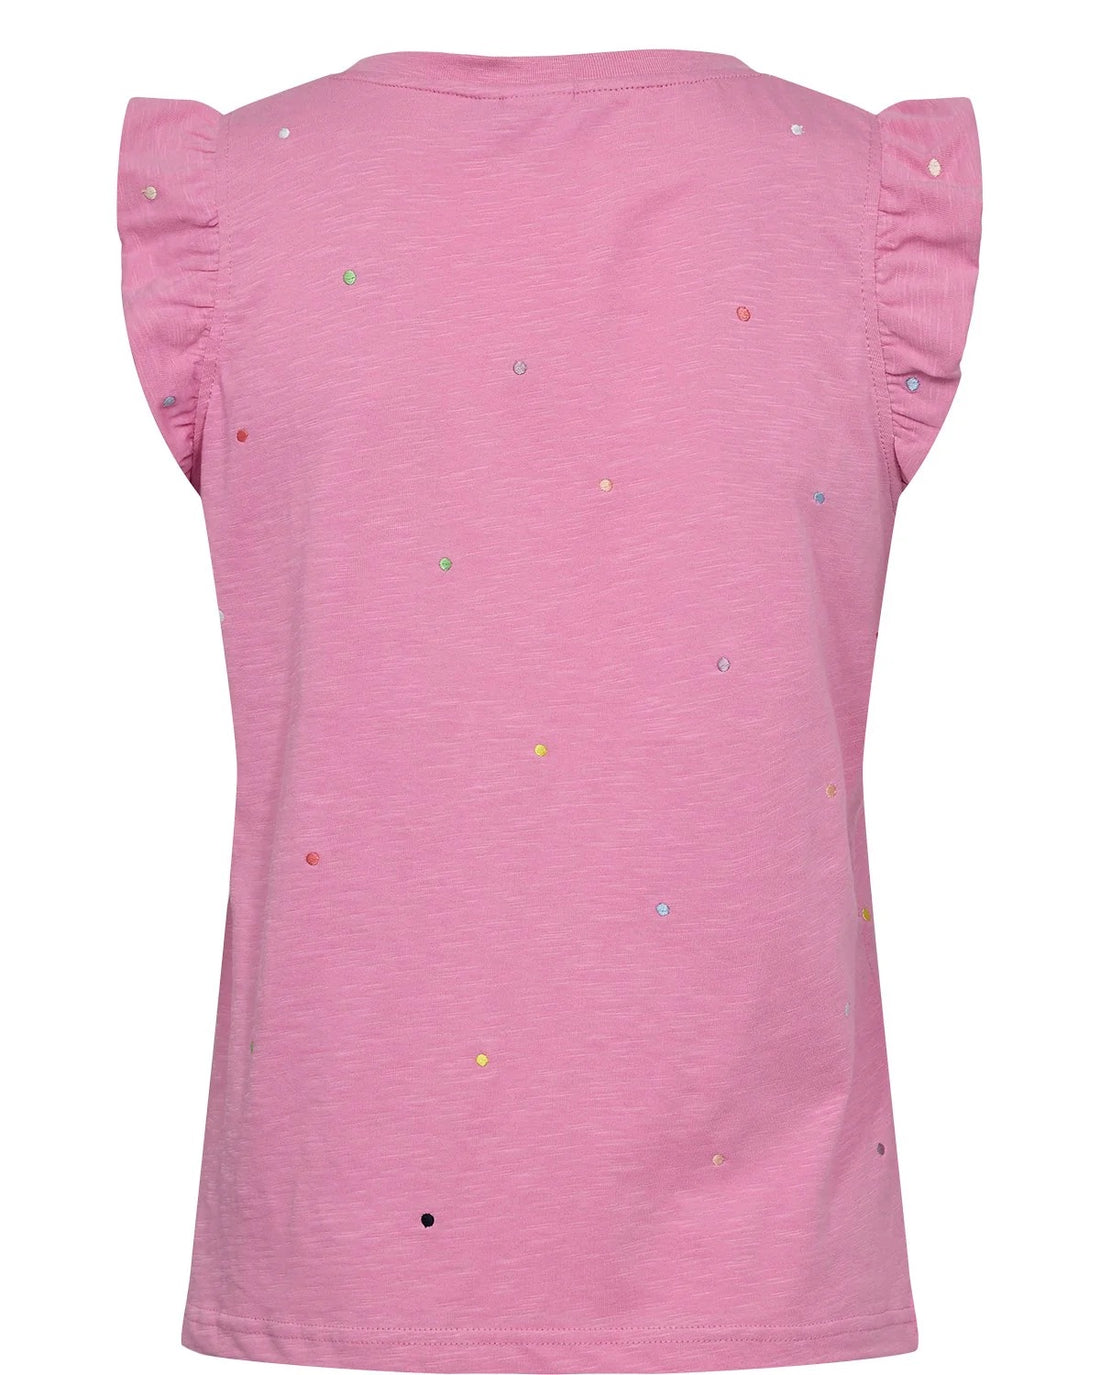 Nümph Nutilde T-shirt in Fuchsia Pink